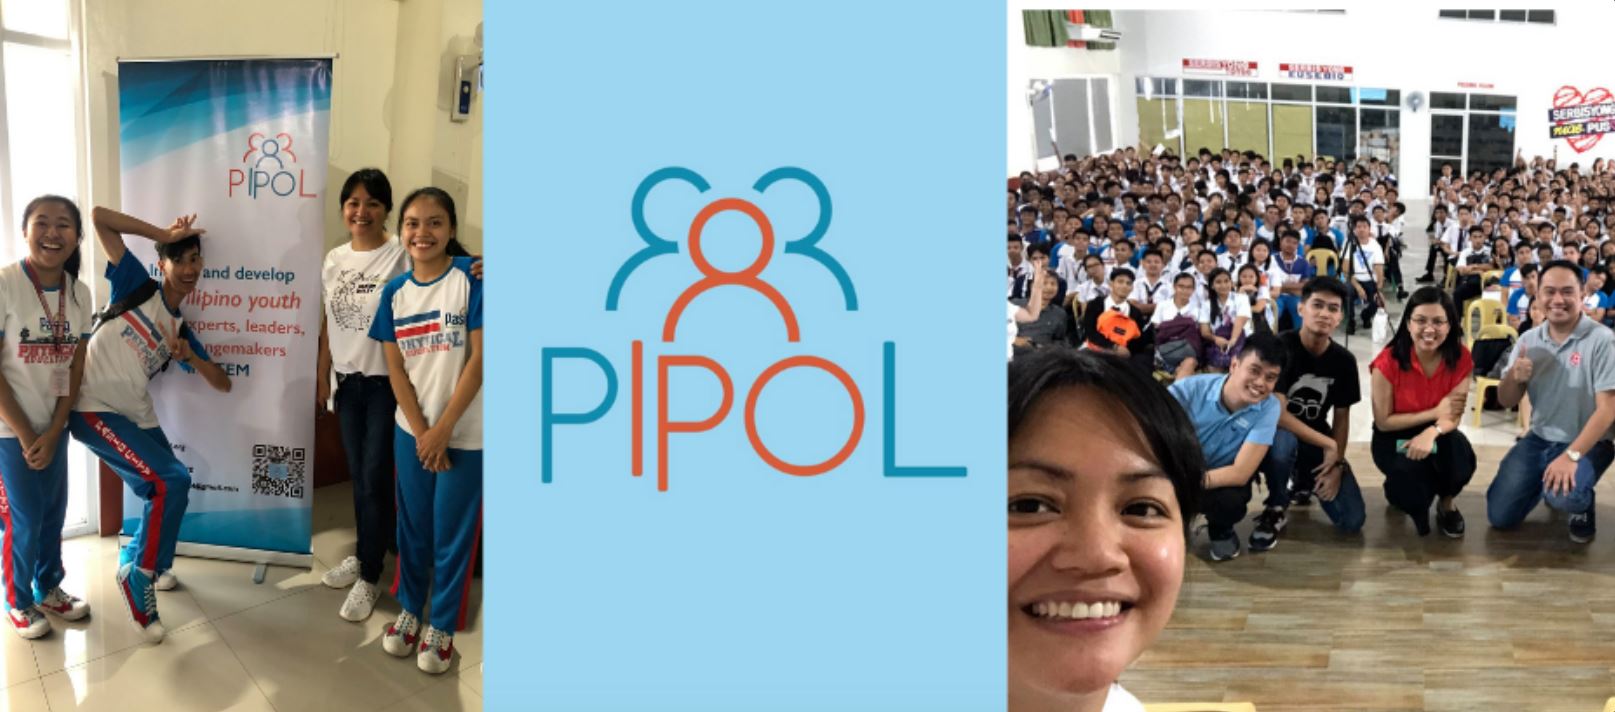 PIPOL raised funds public school